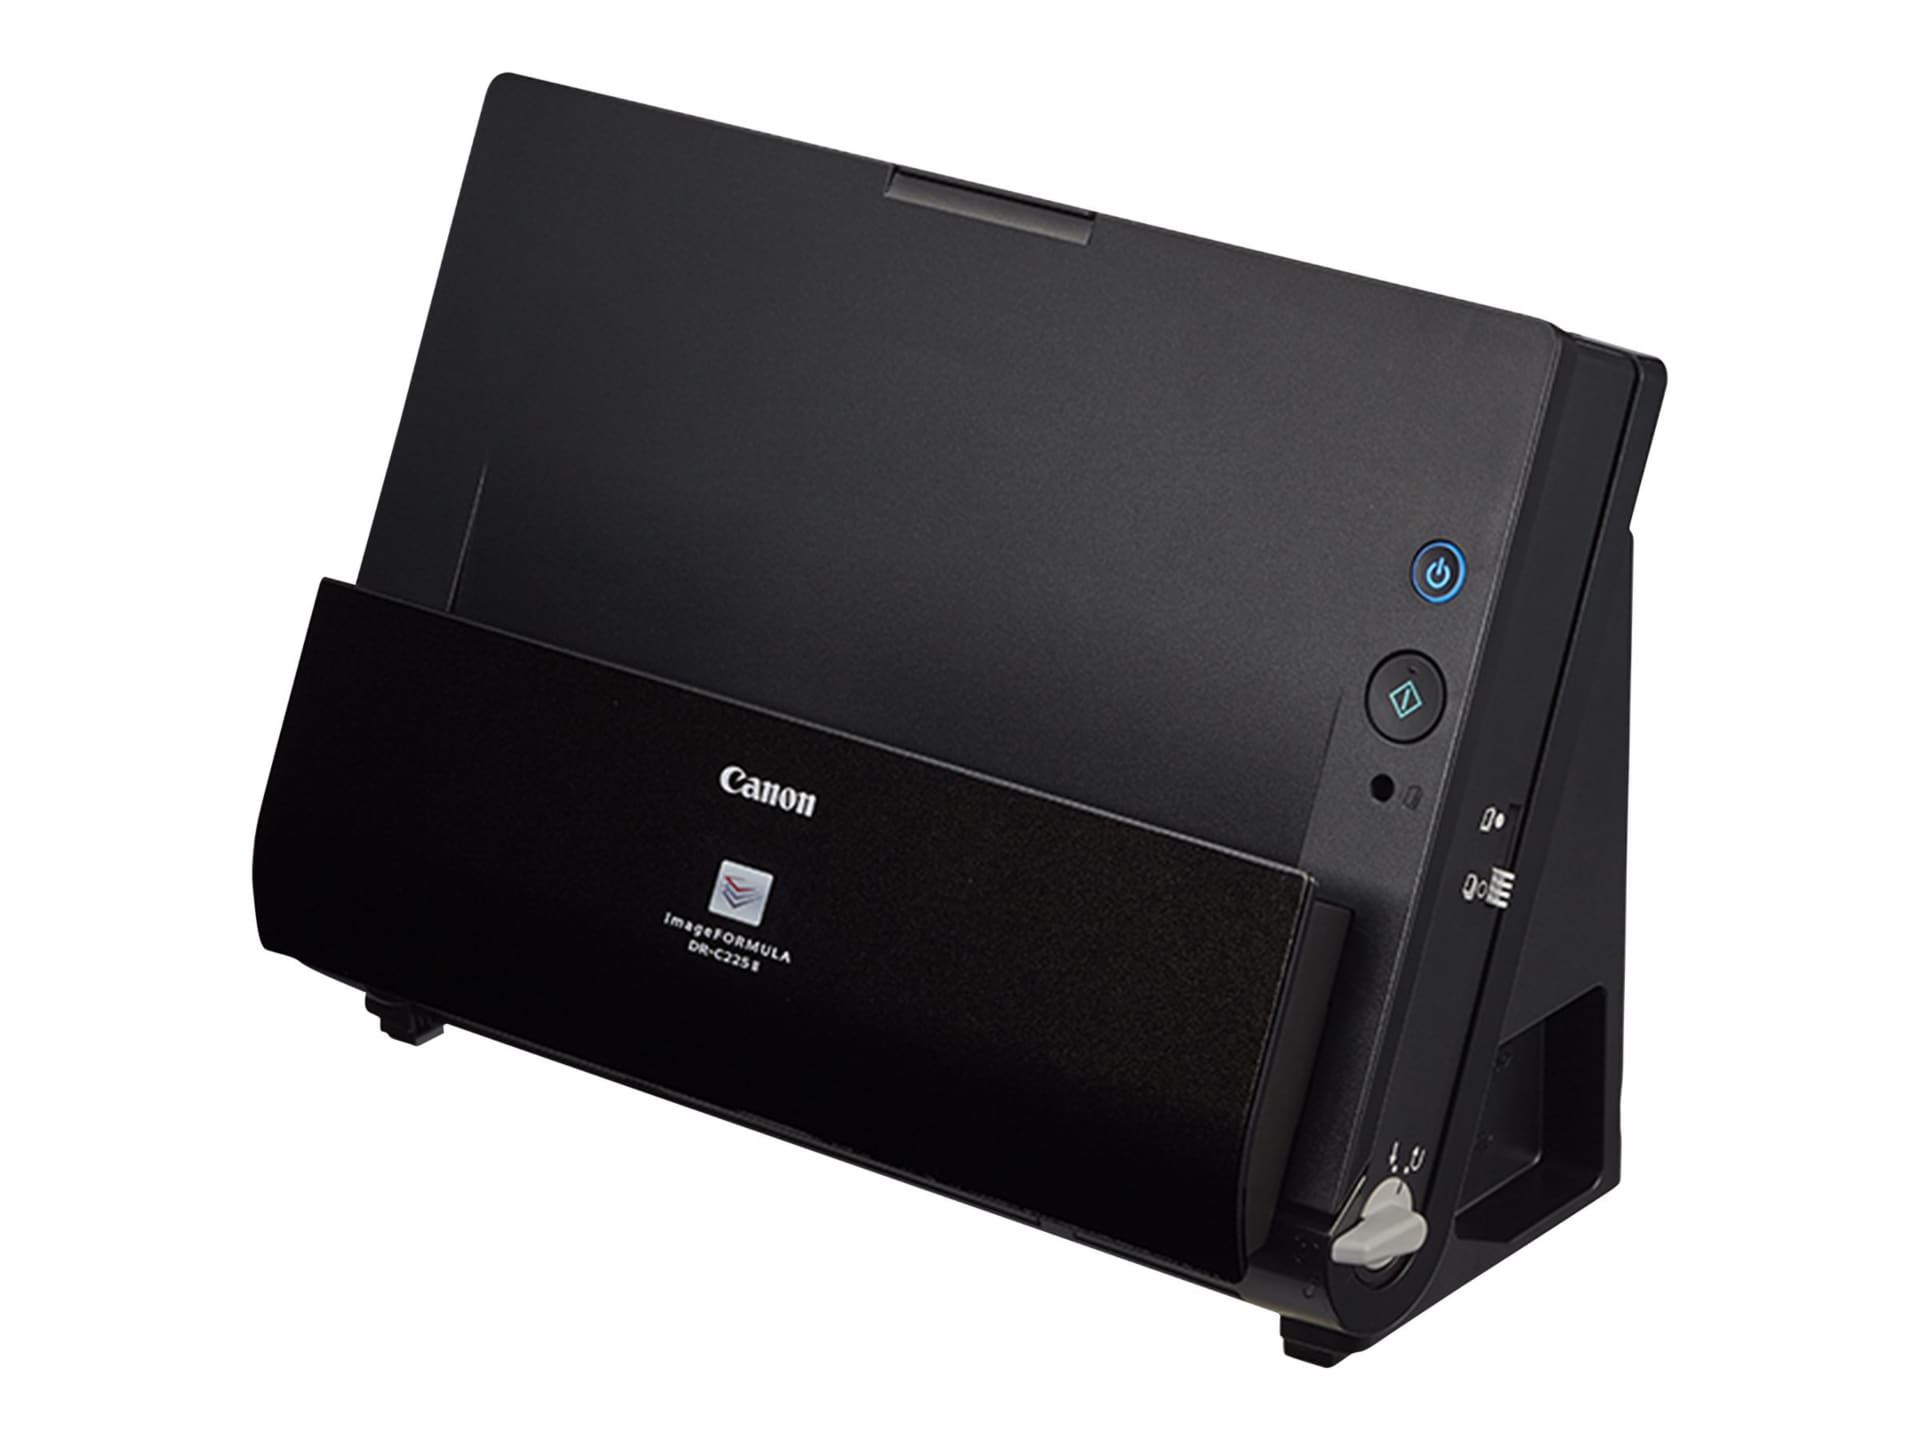 Canon imageFORMULA DR-C225 II Office document scanner desktop USB 2.0  3258C002 Document Scanners